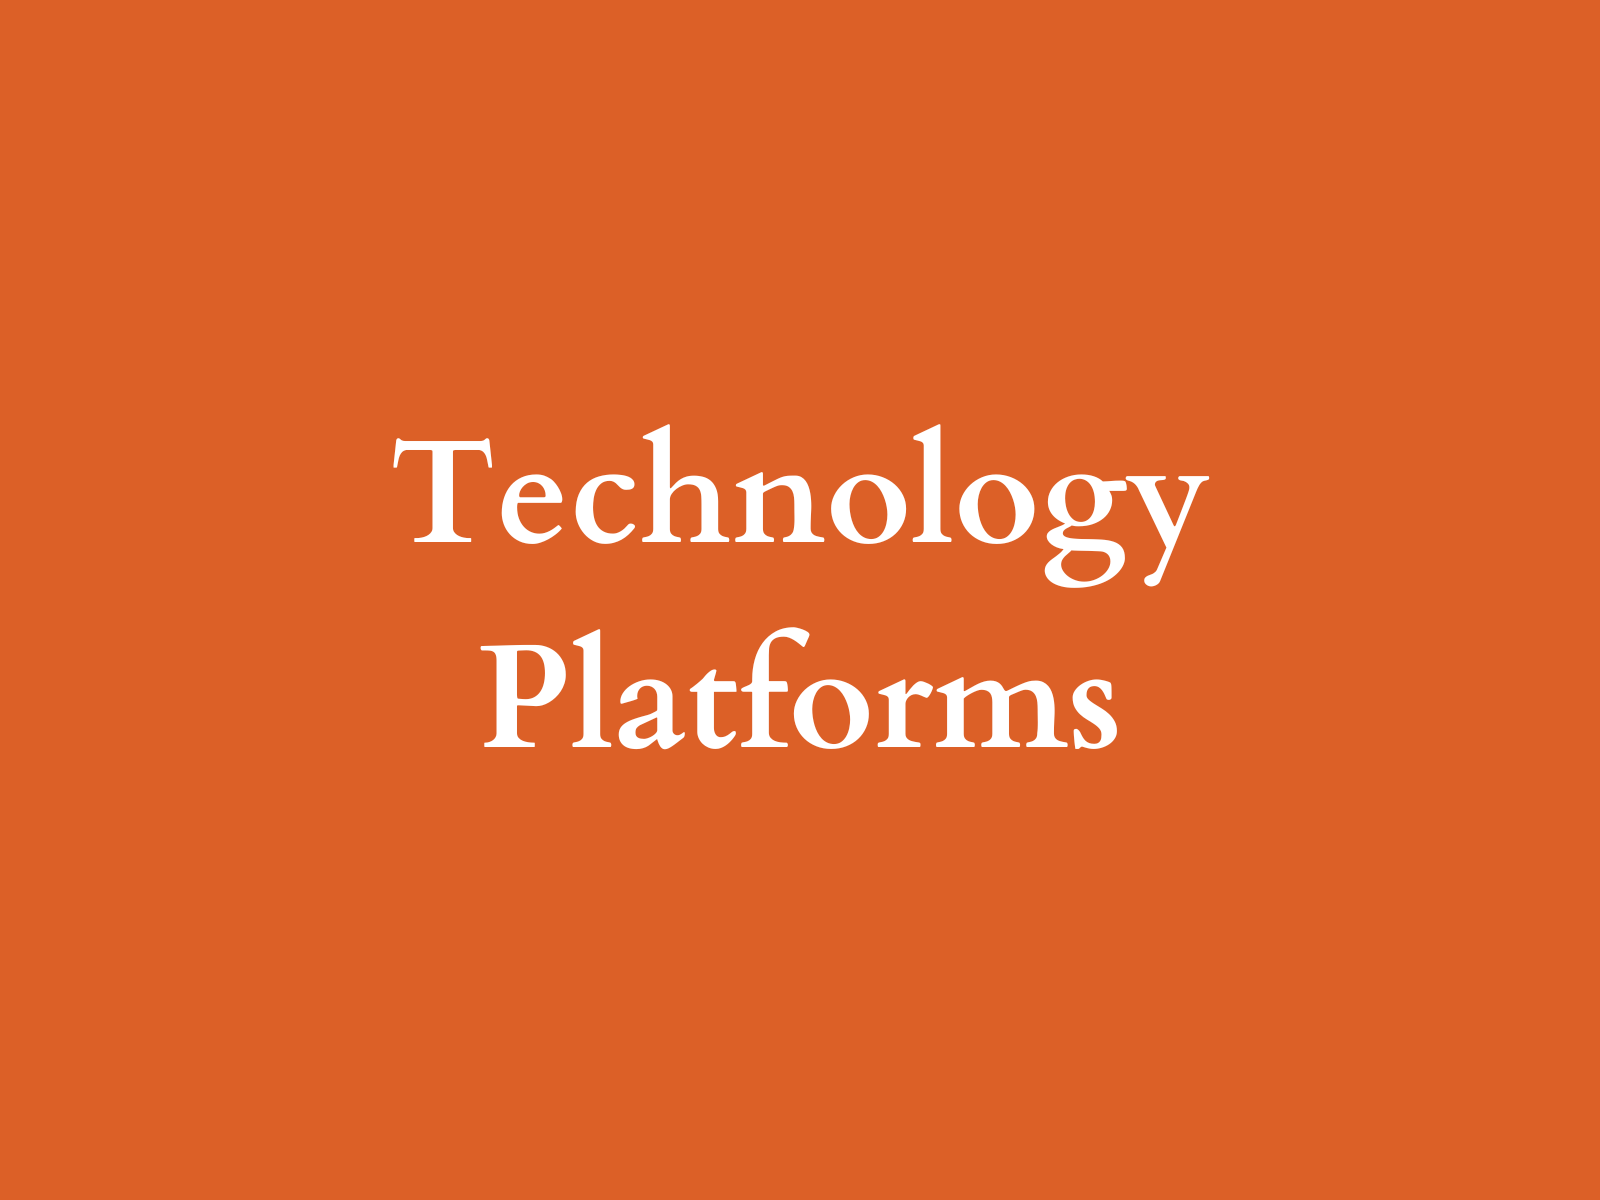 Research Platforms